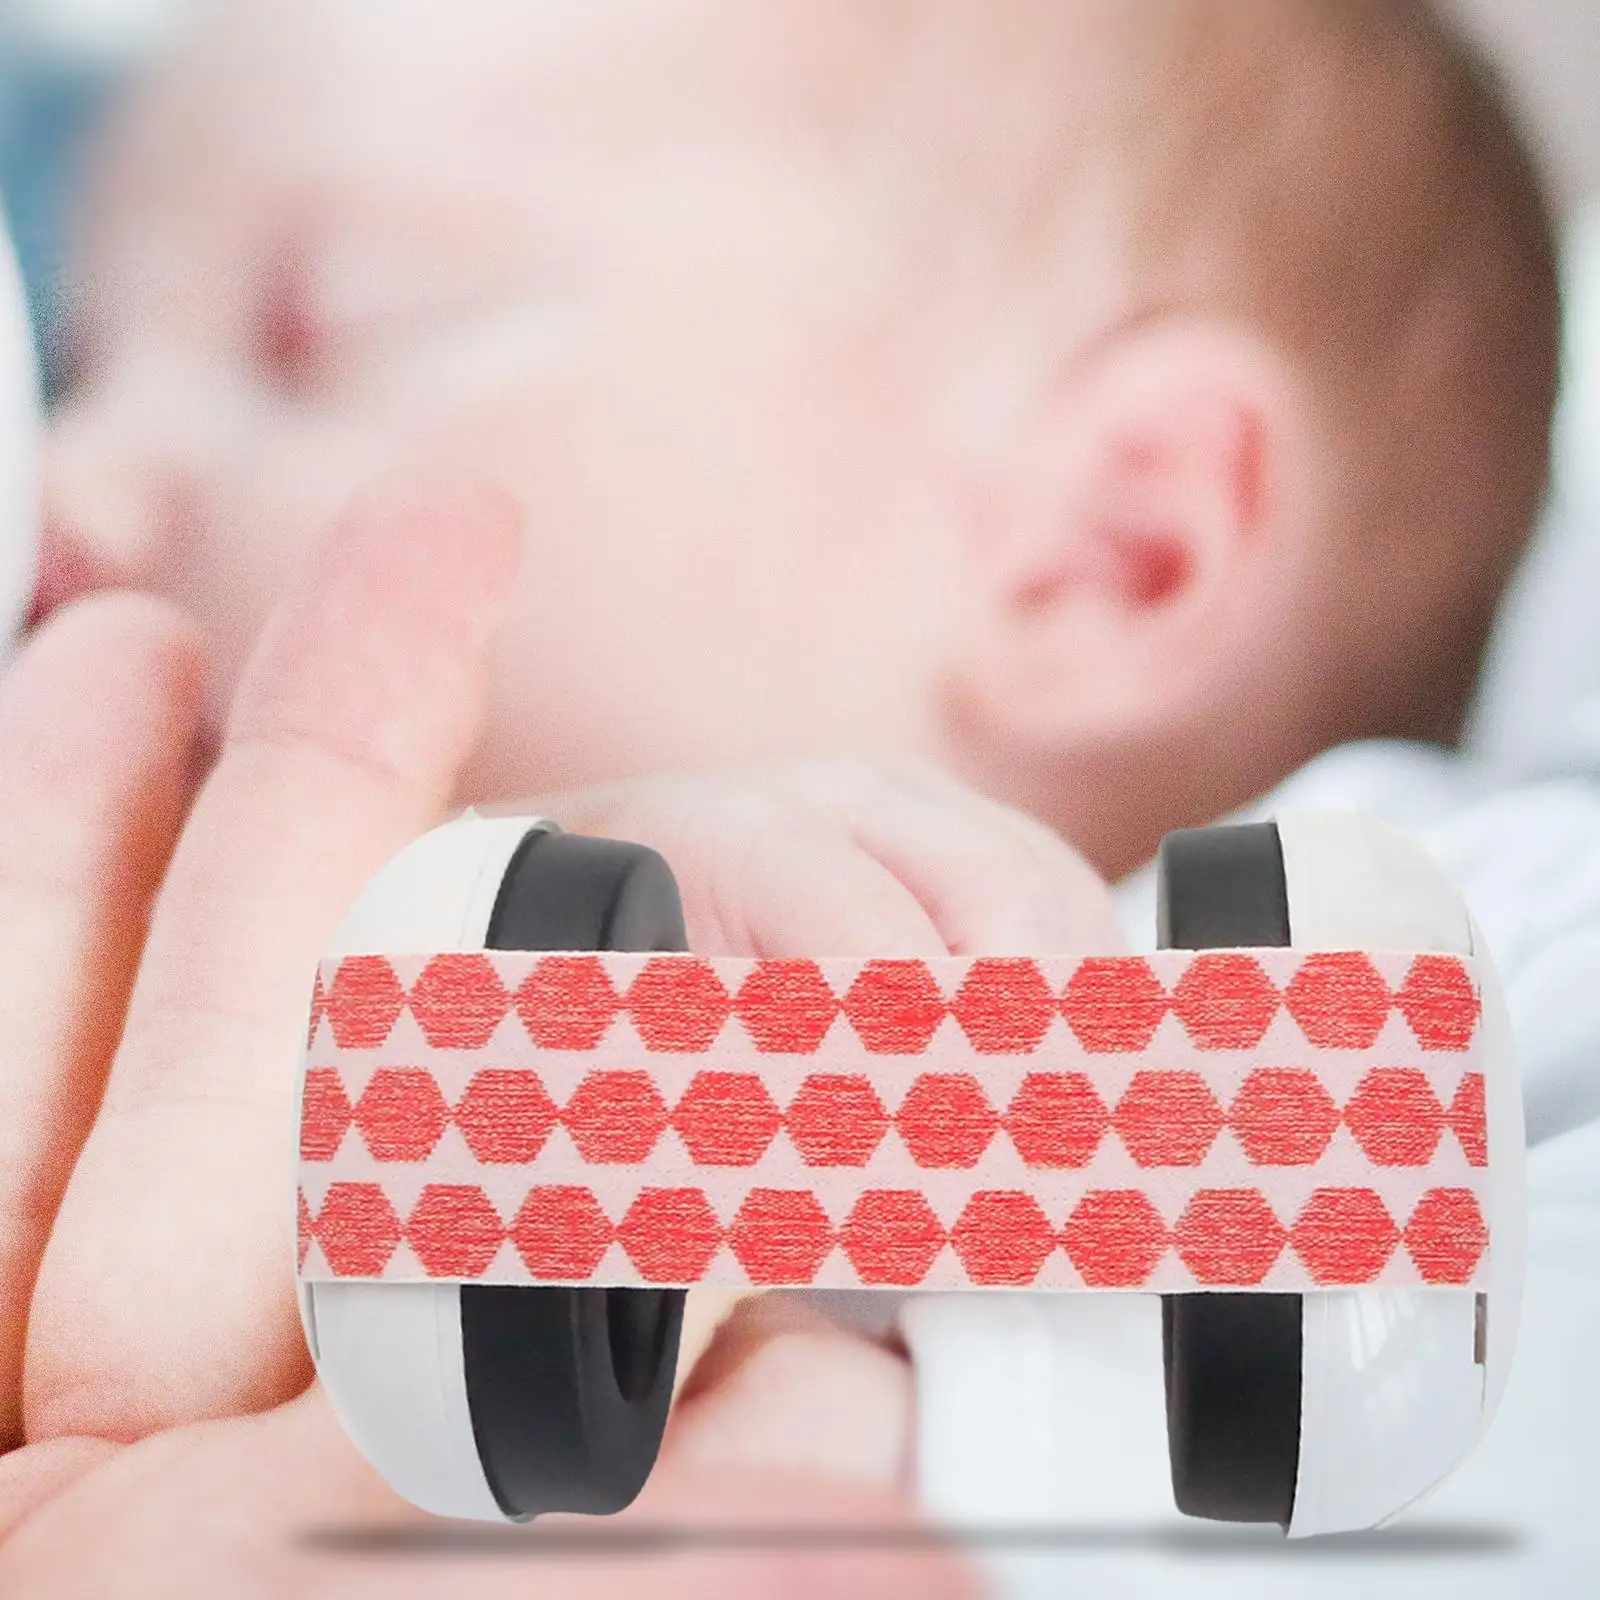 Infant Soundproof Earmuff with Elastic Headband for Toddler Travel Sleep